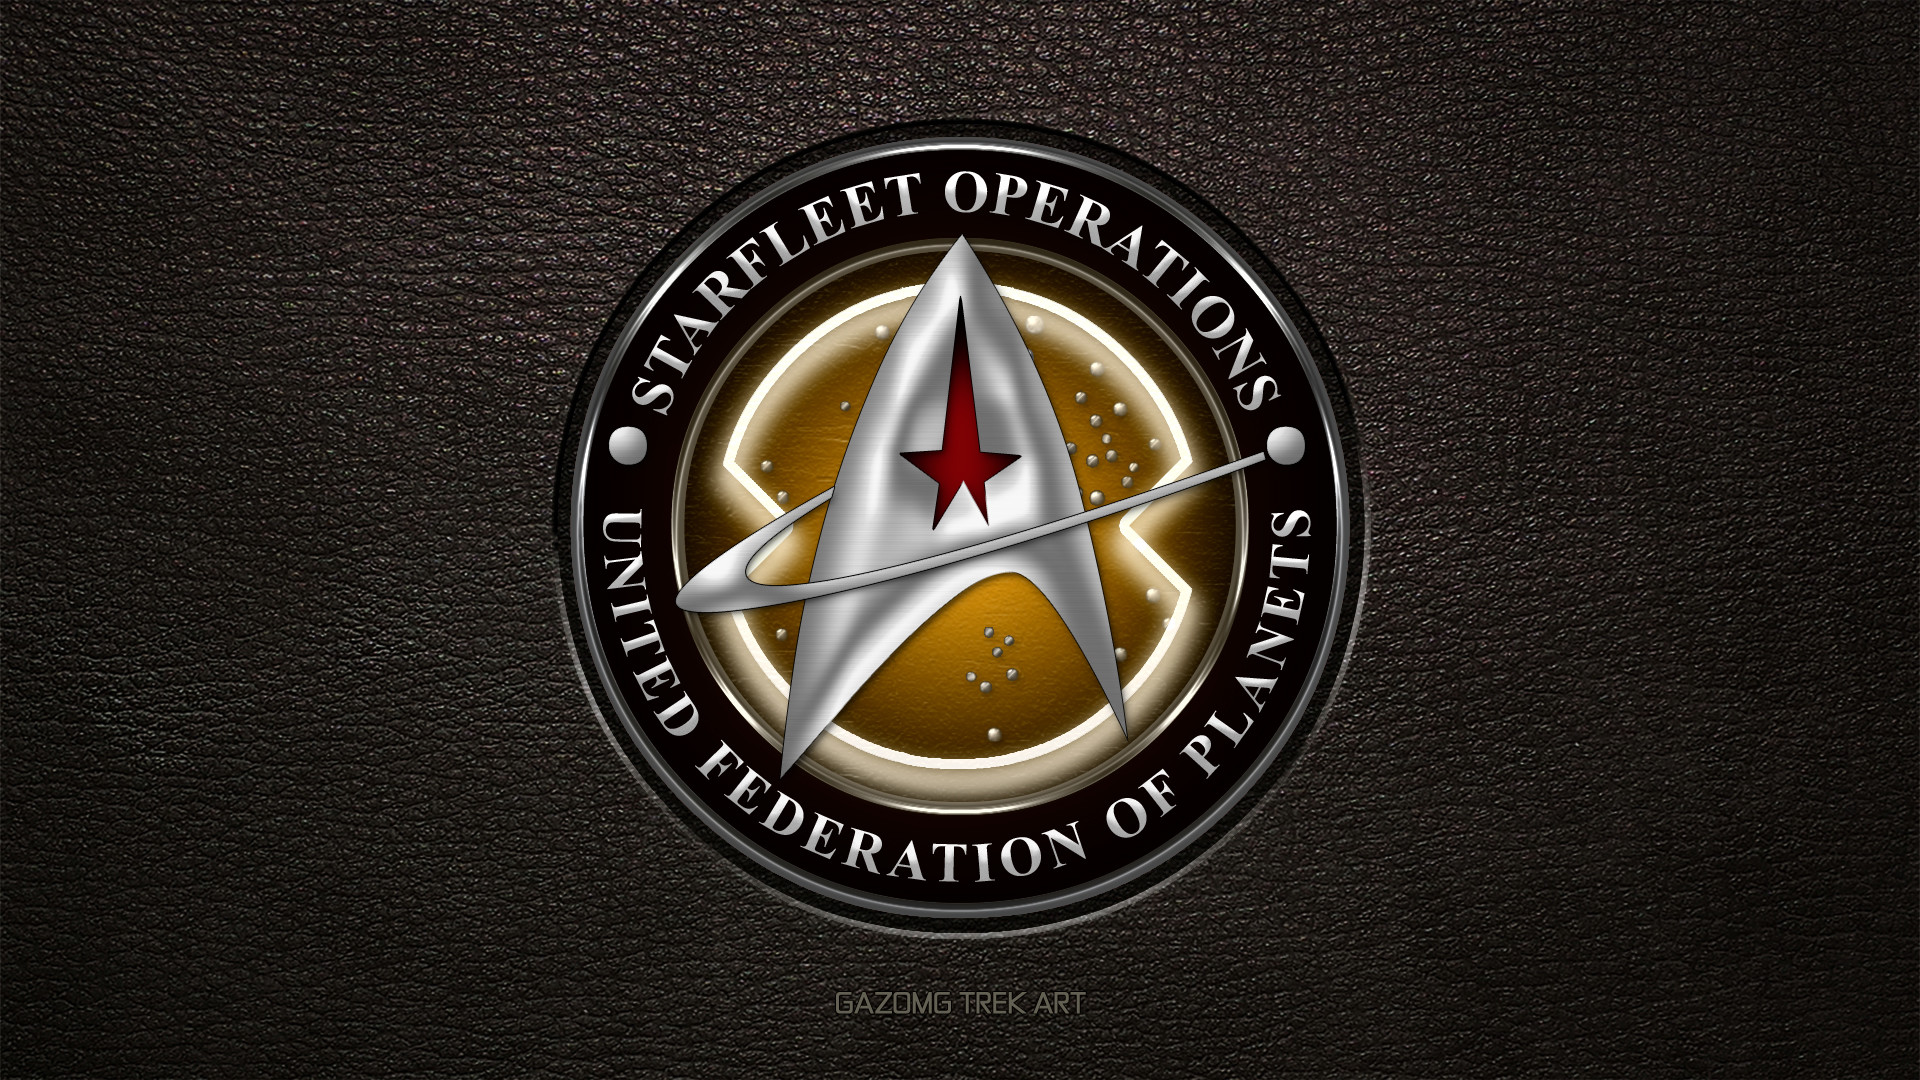 Star trek starfleet operations th century logo by gazomg